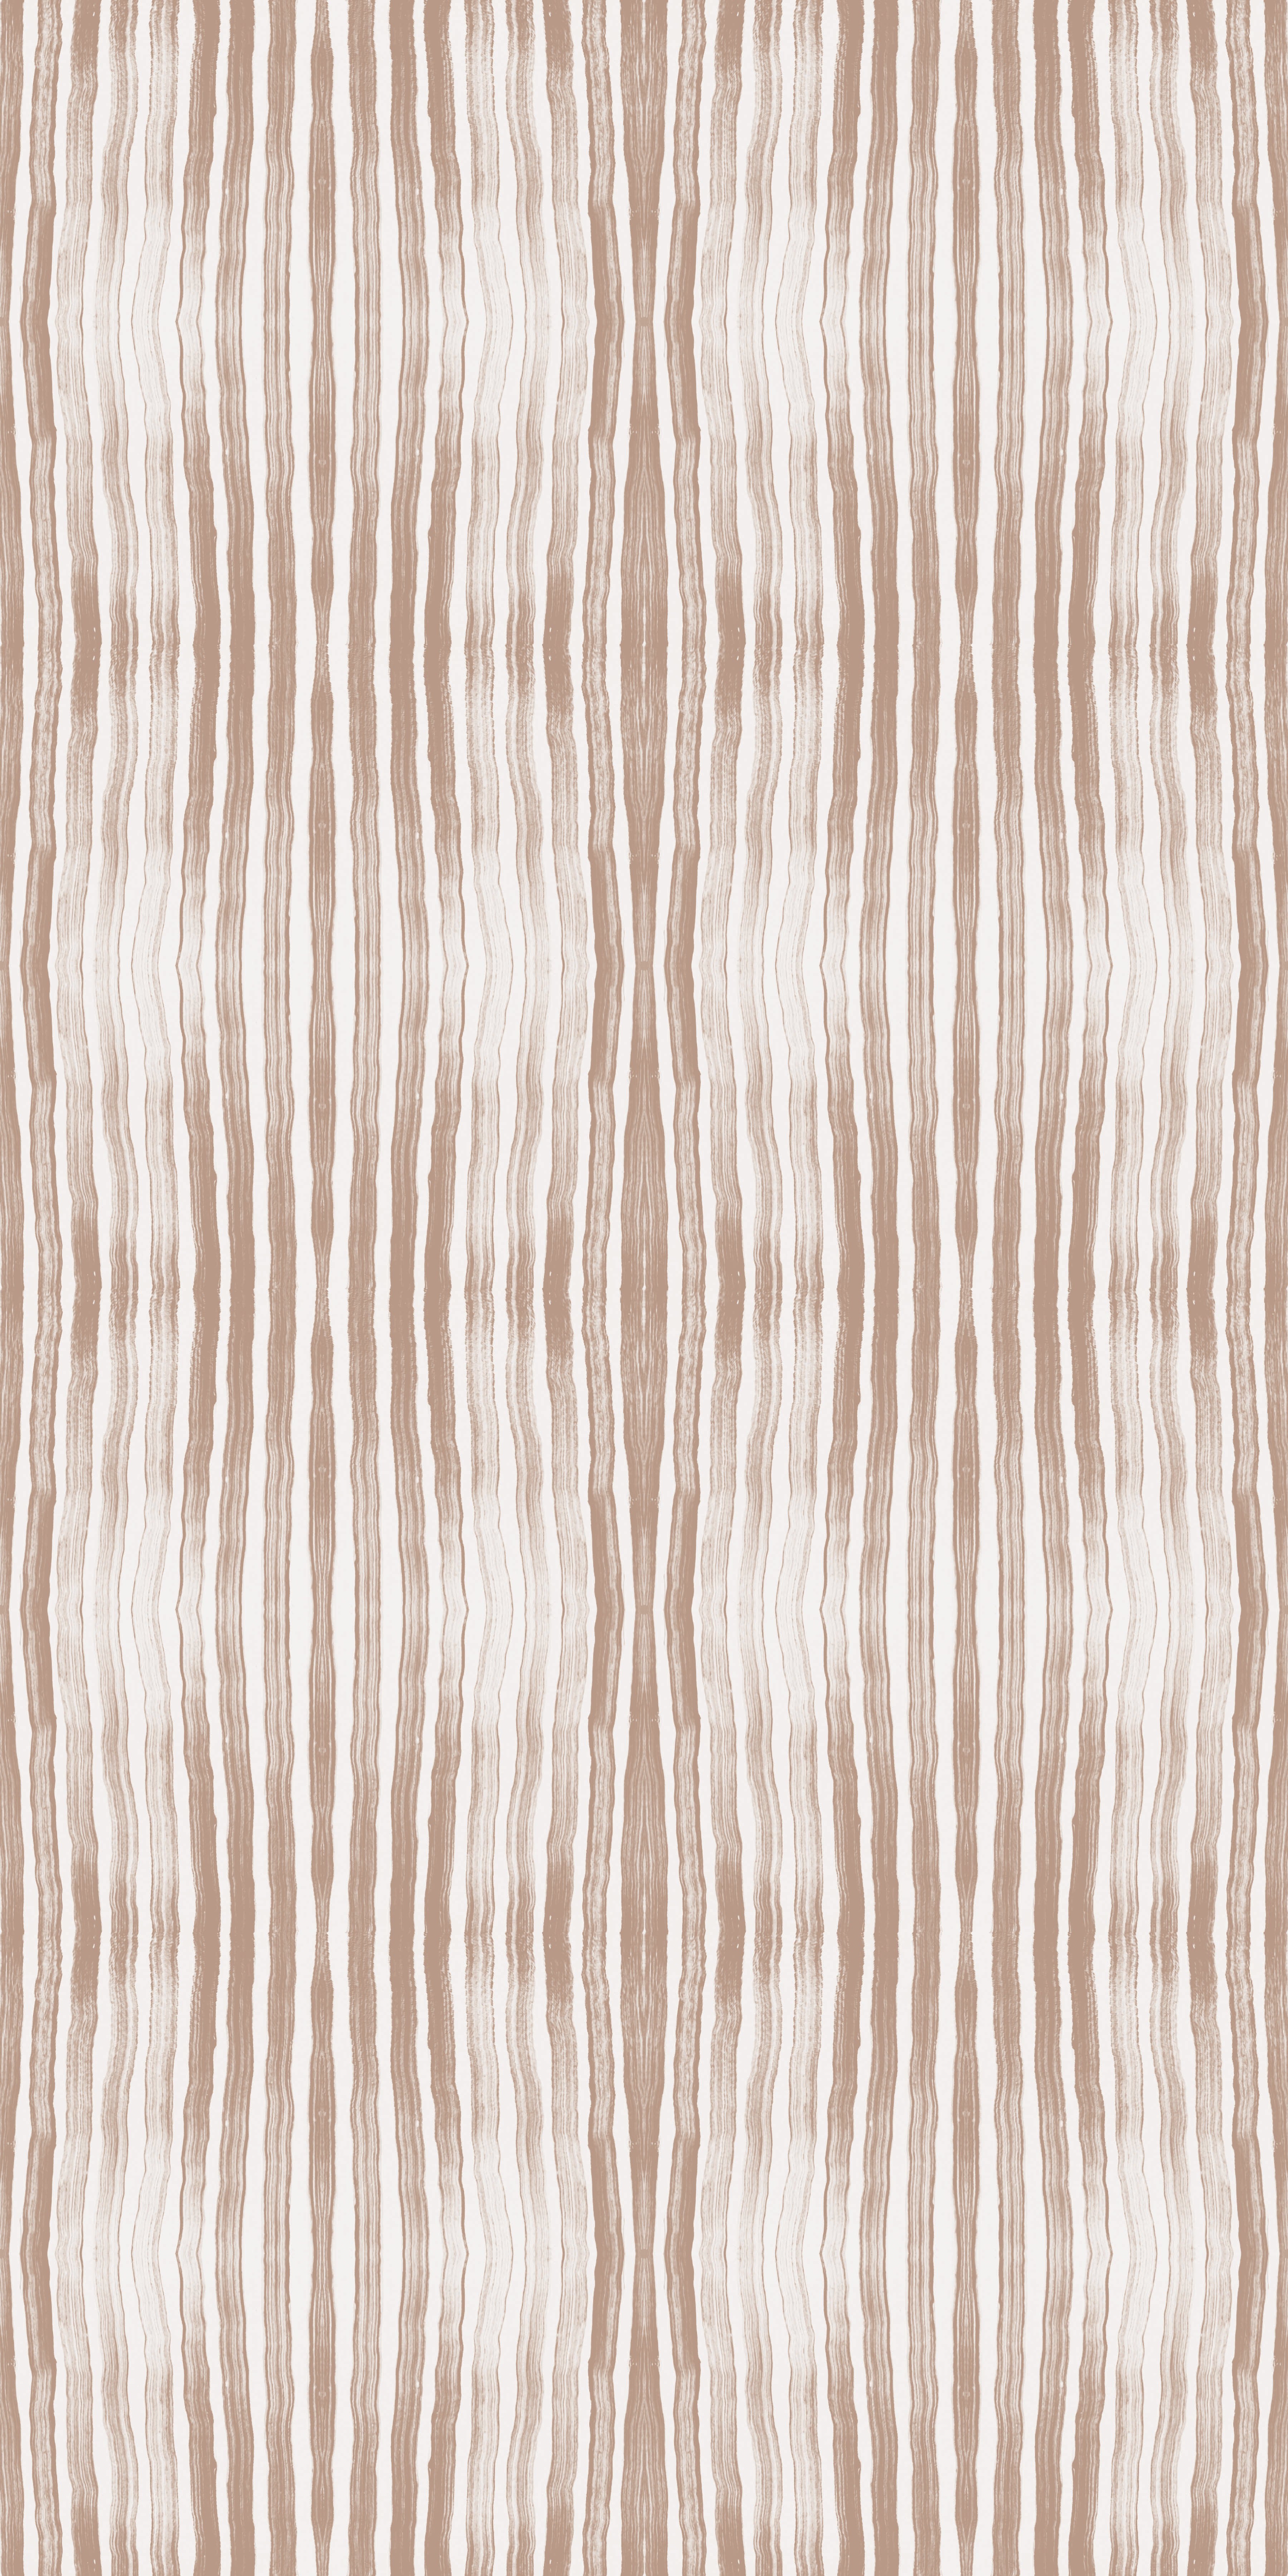 Faded Dream Peel & Stick Wallpaper - 2' x 10' - Image 1